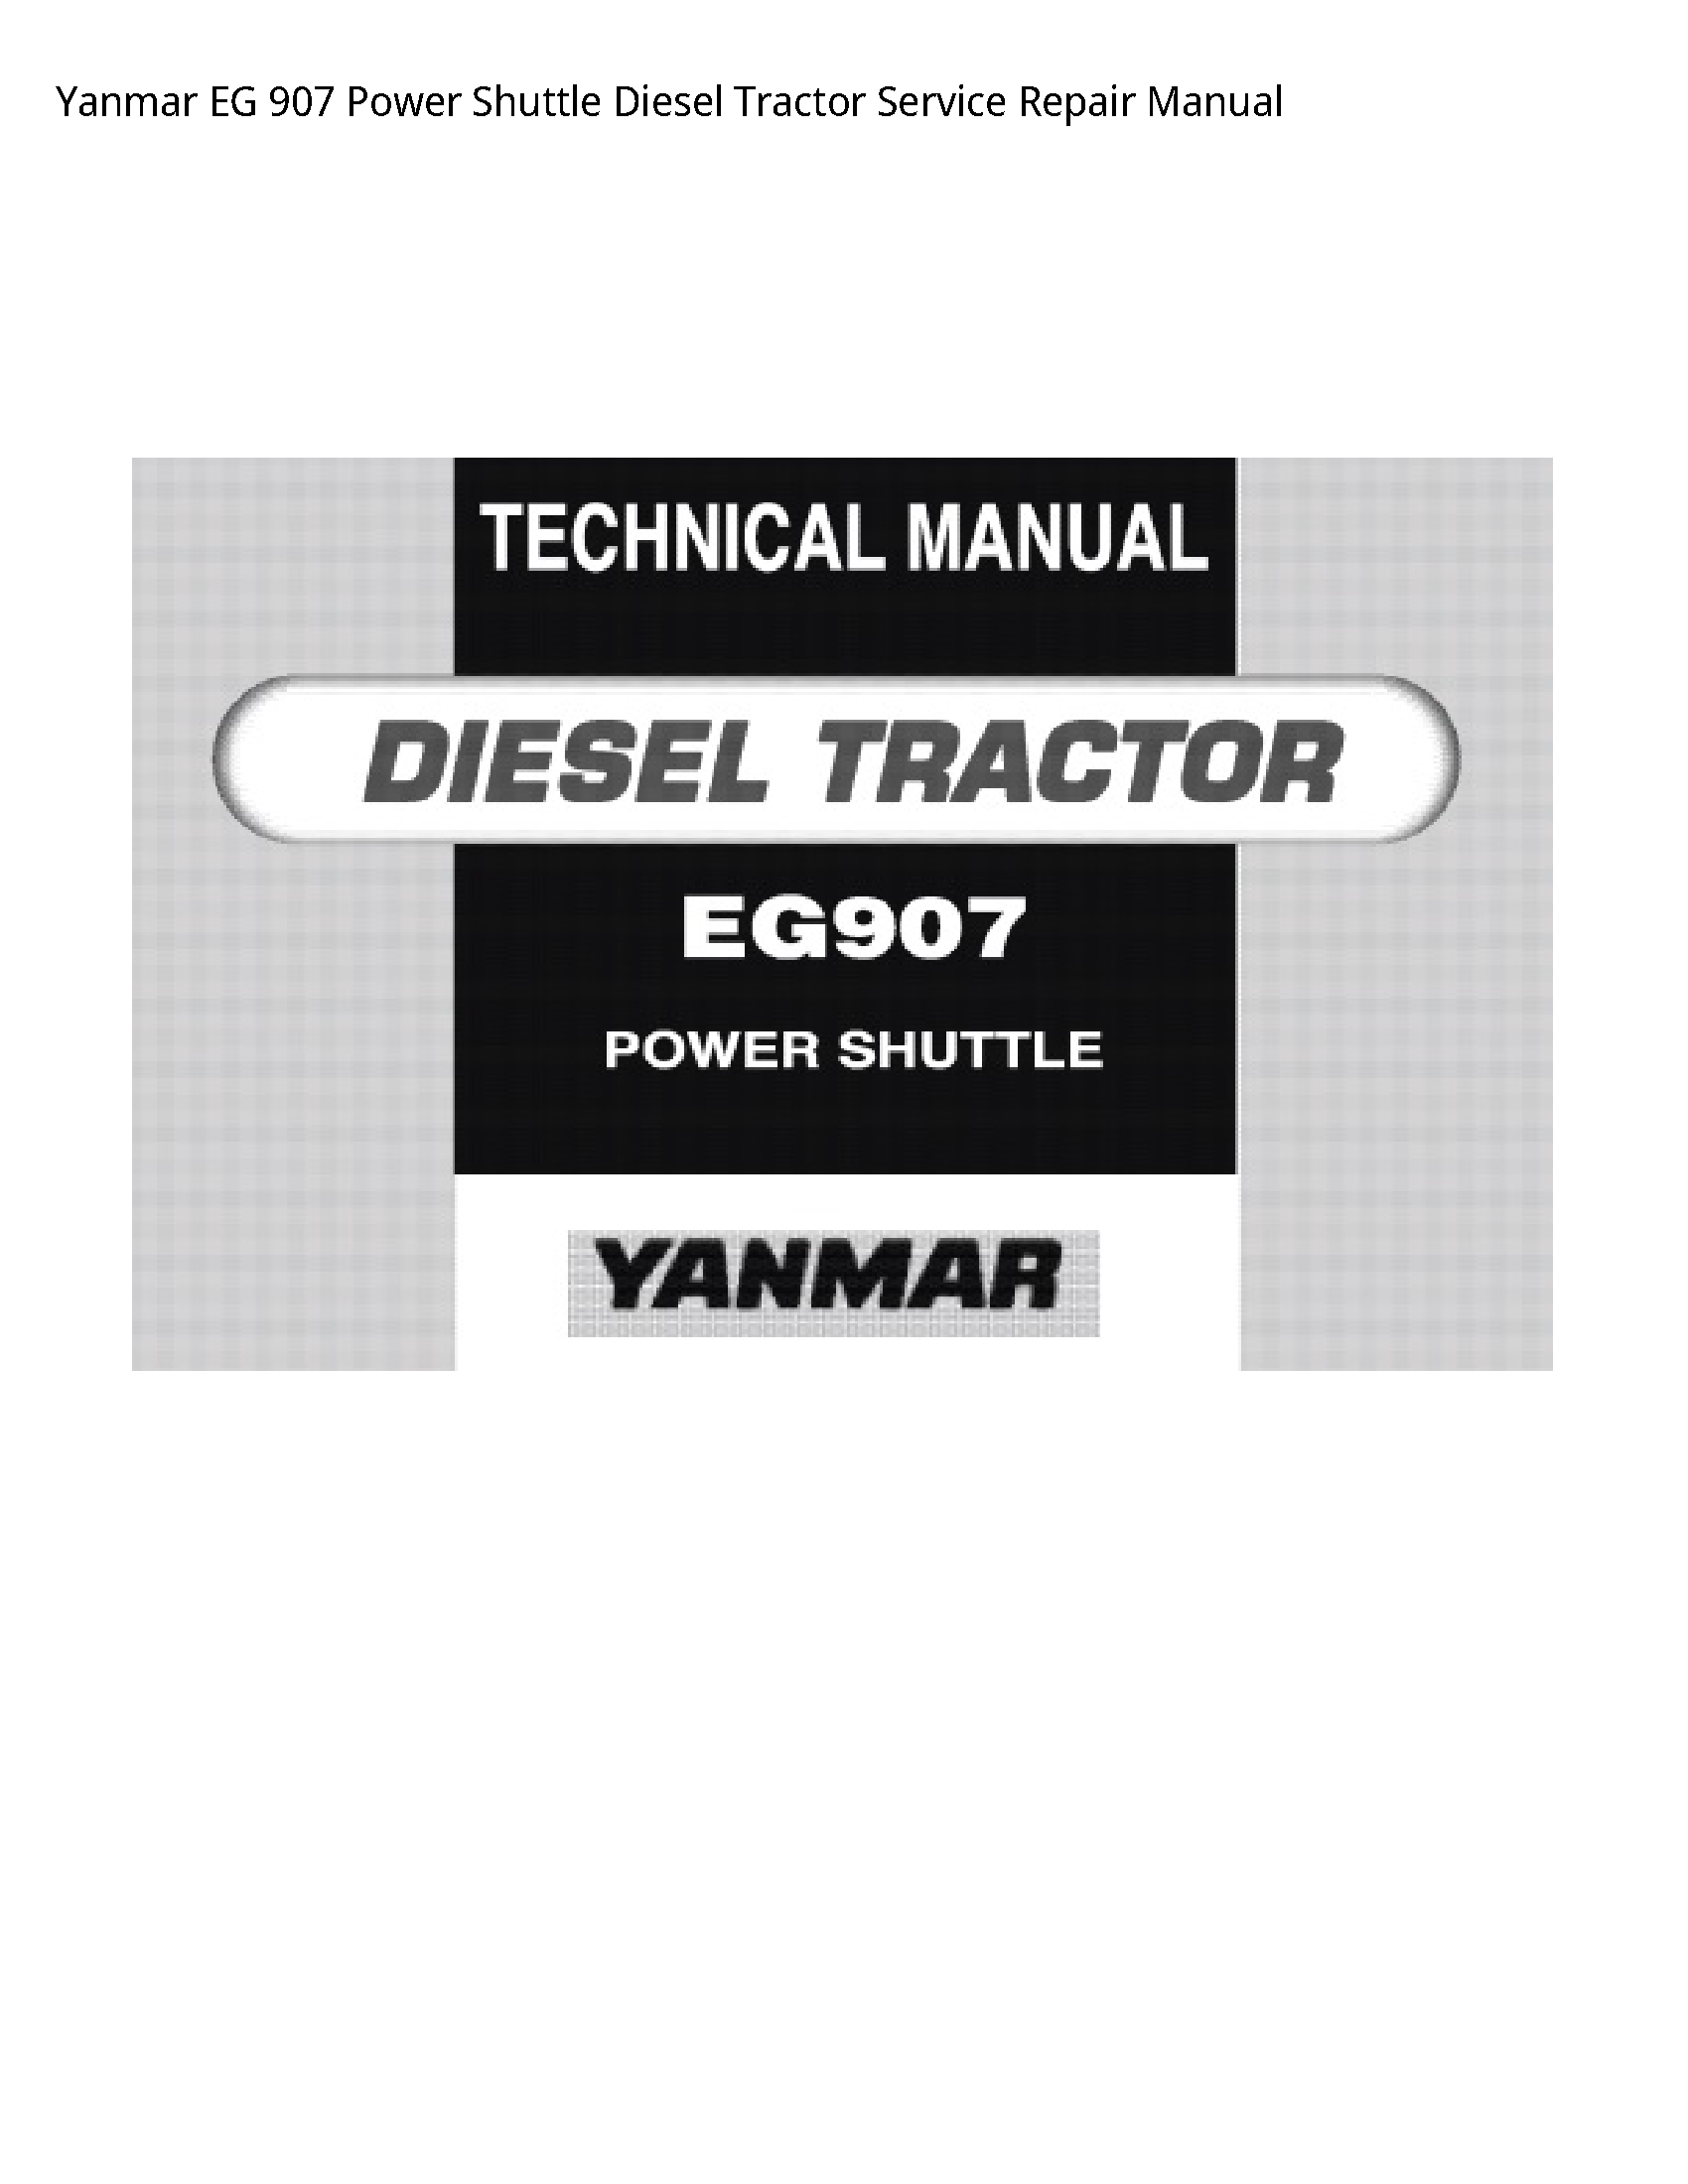 Yanmar 907 EG Power Shuttle Diesel Tractor manual